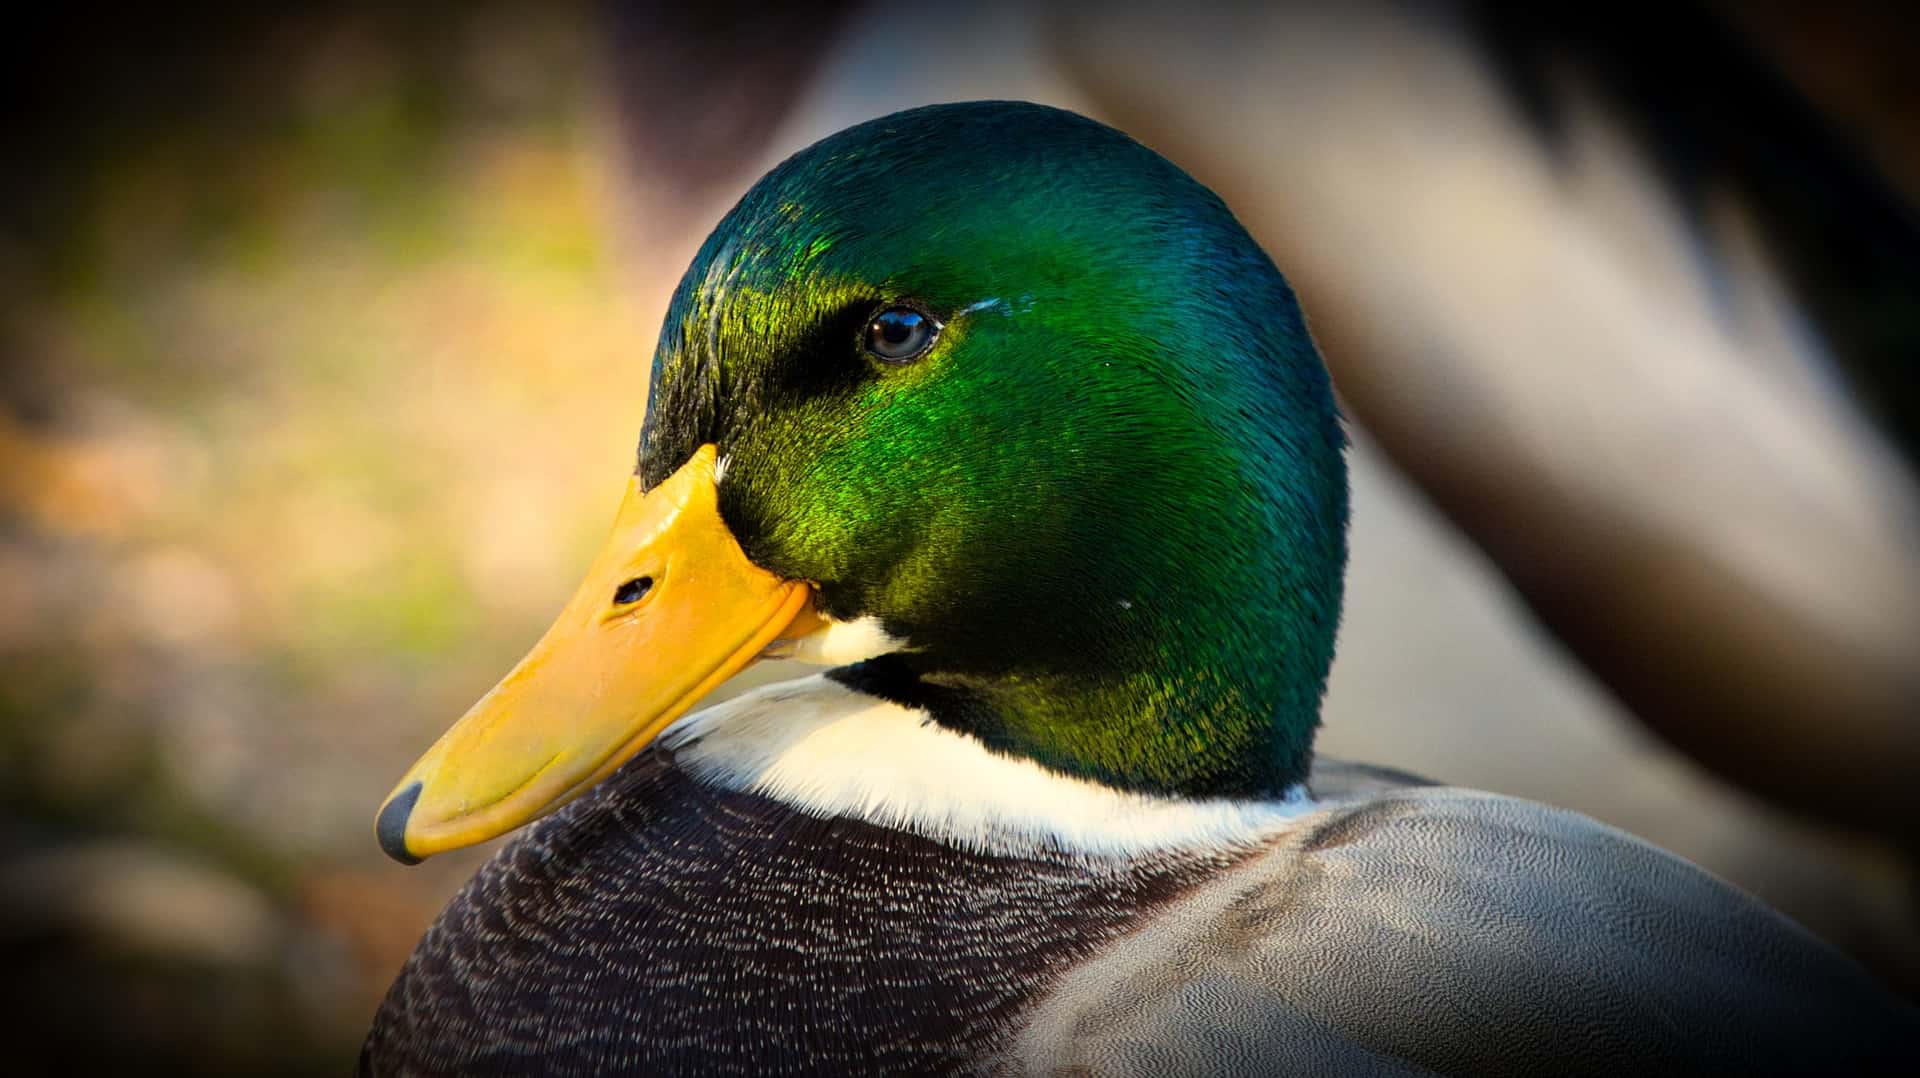 10 Facts About Ducks - FOUR PAWS International - Animal Welfare Organisation